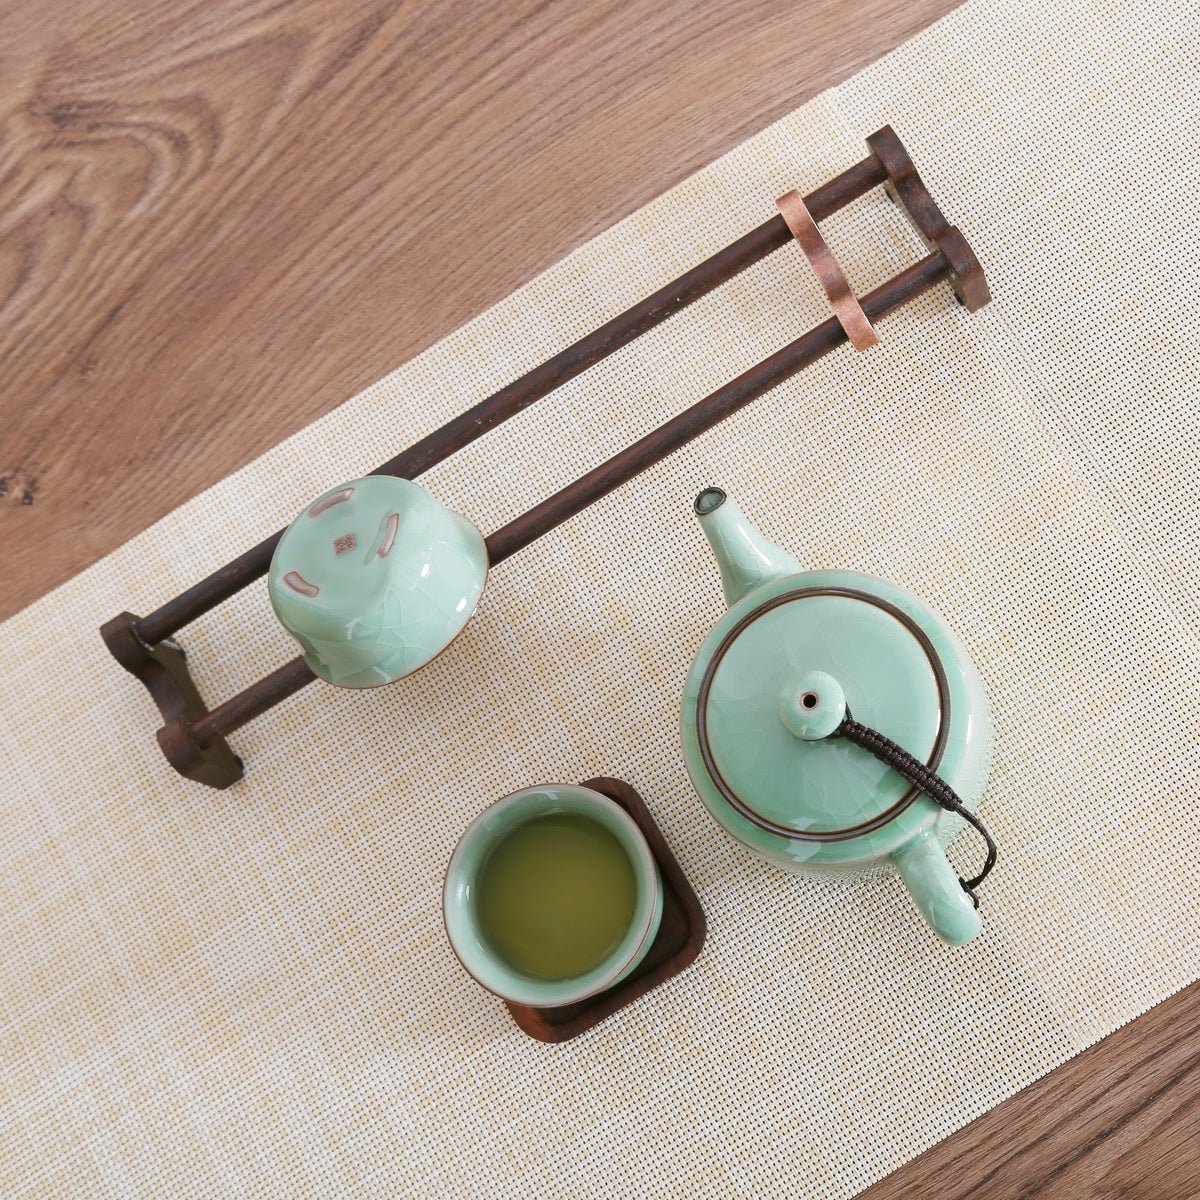 Longquan Celadon Ge ware 2 Wide Cups Gift Tea Set - Taishan Tea Club